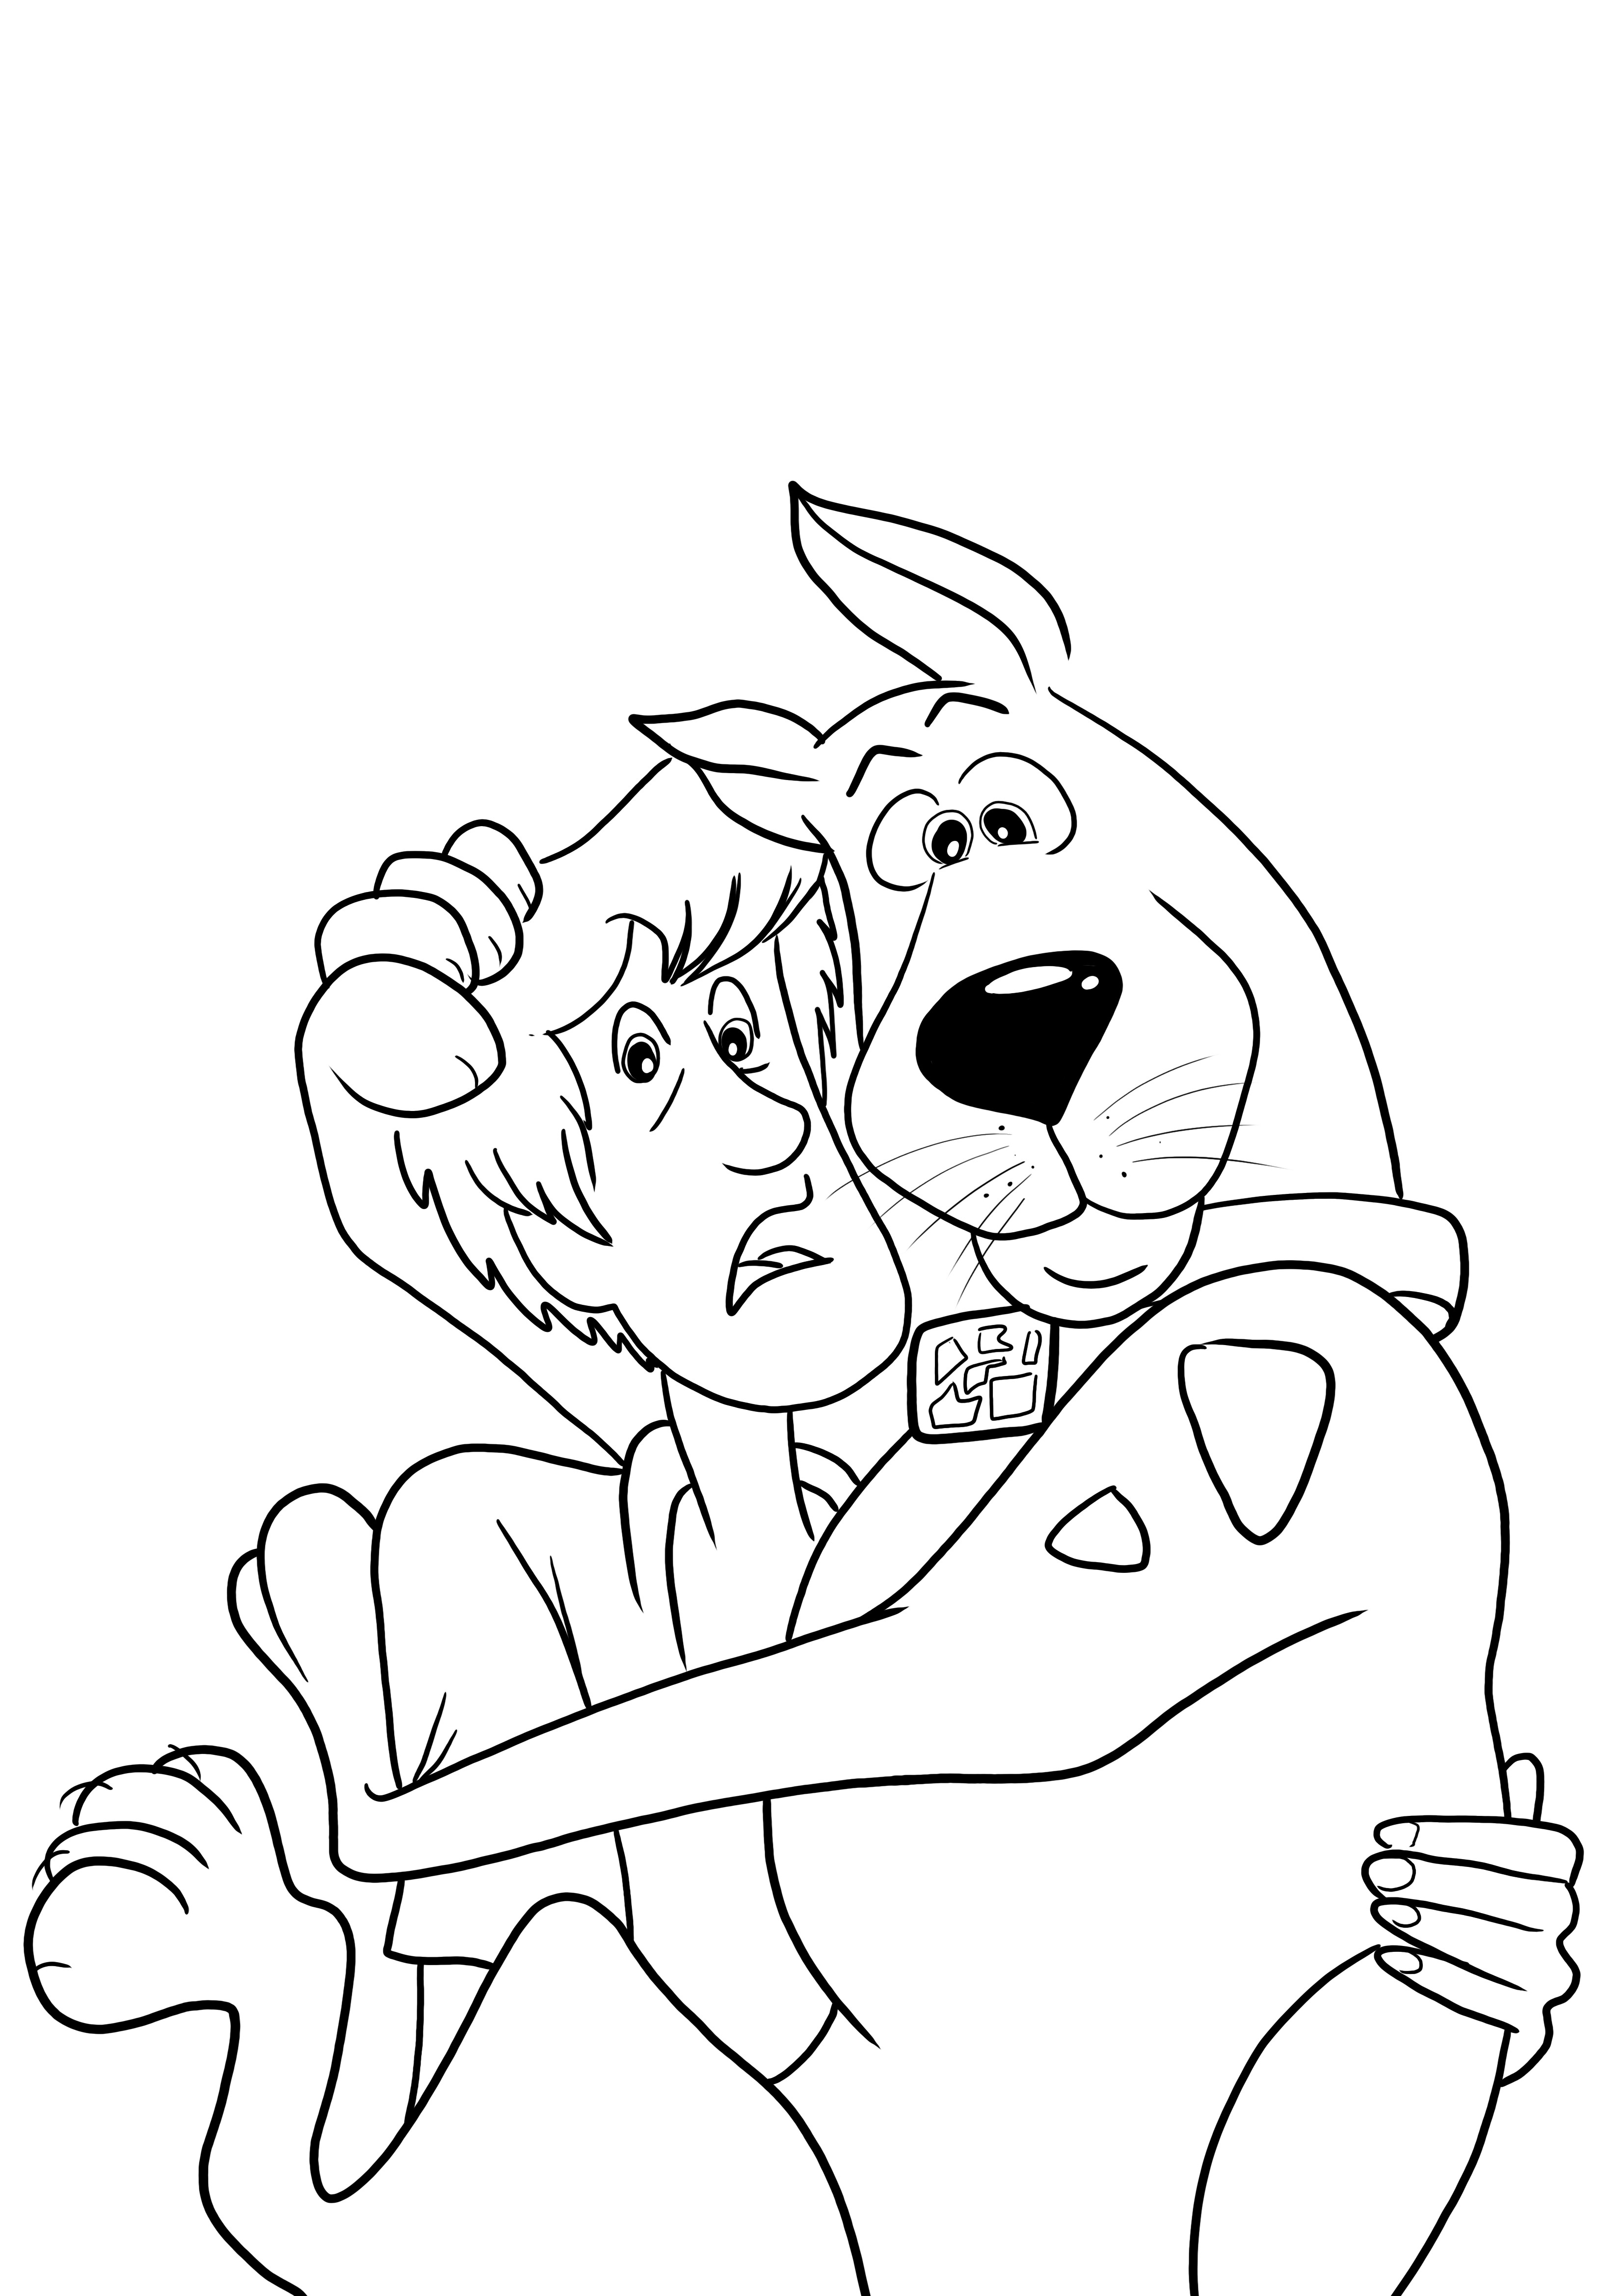 Lembar mewarnai gratis Scooby Doo dan Shaggy takut untuk diunduh untuk anak-anak